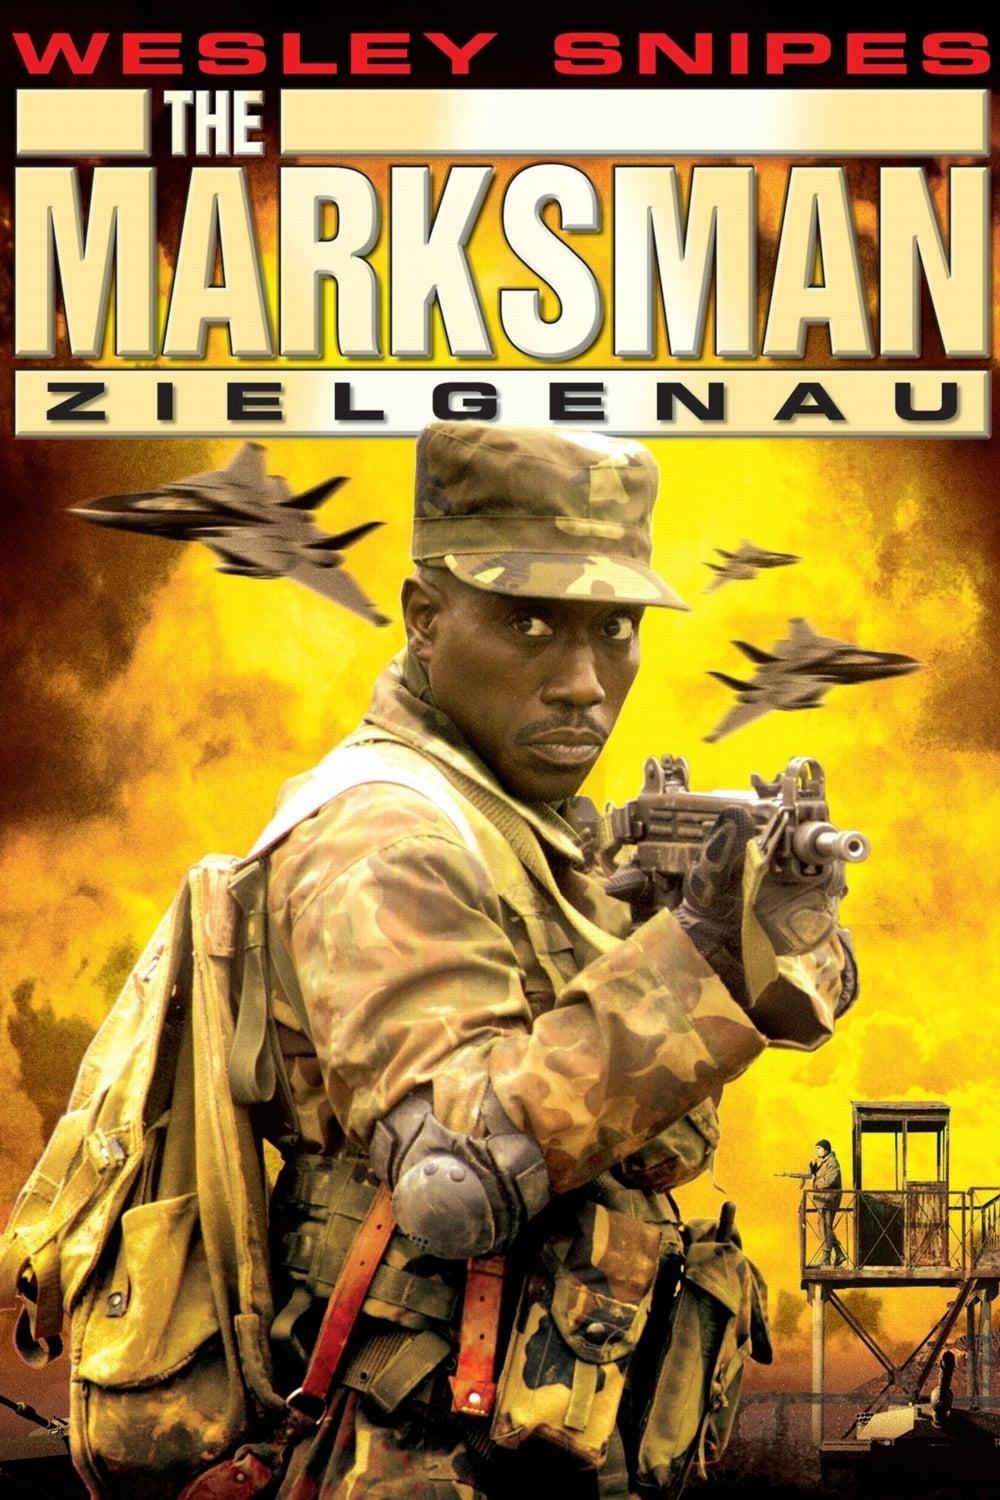 The Marksman - Zielgenau poster